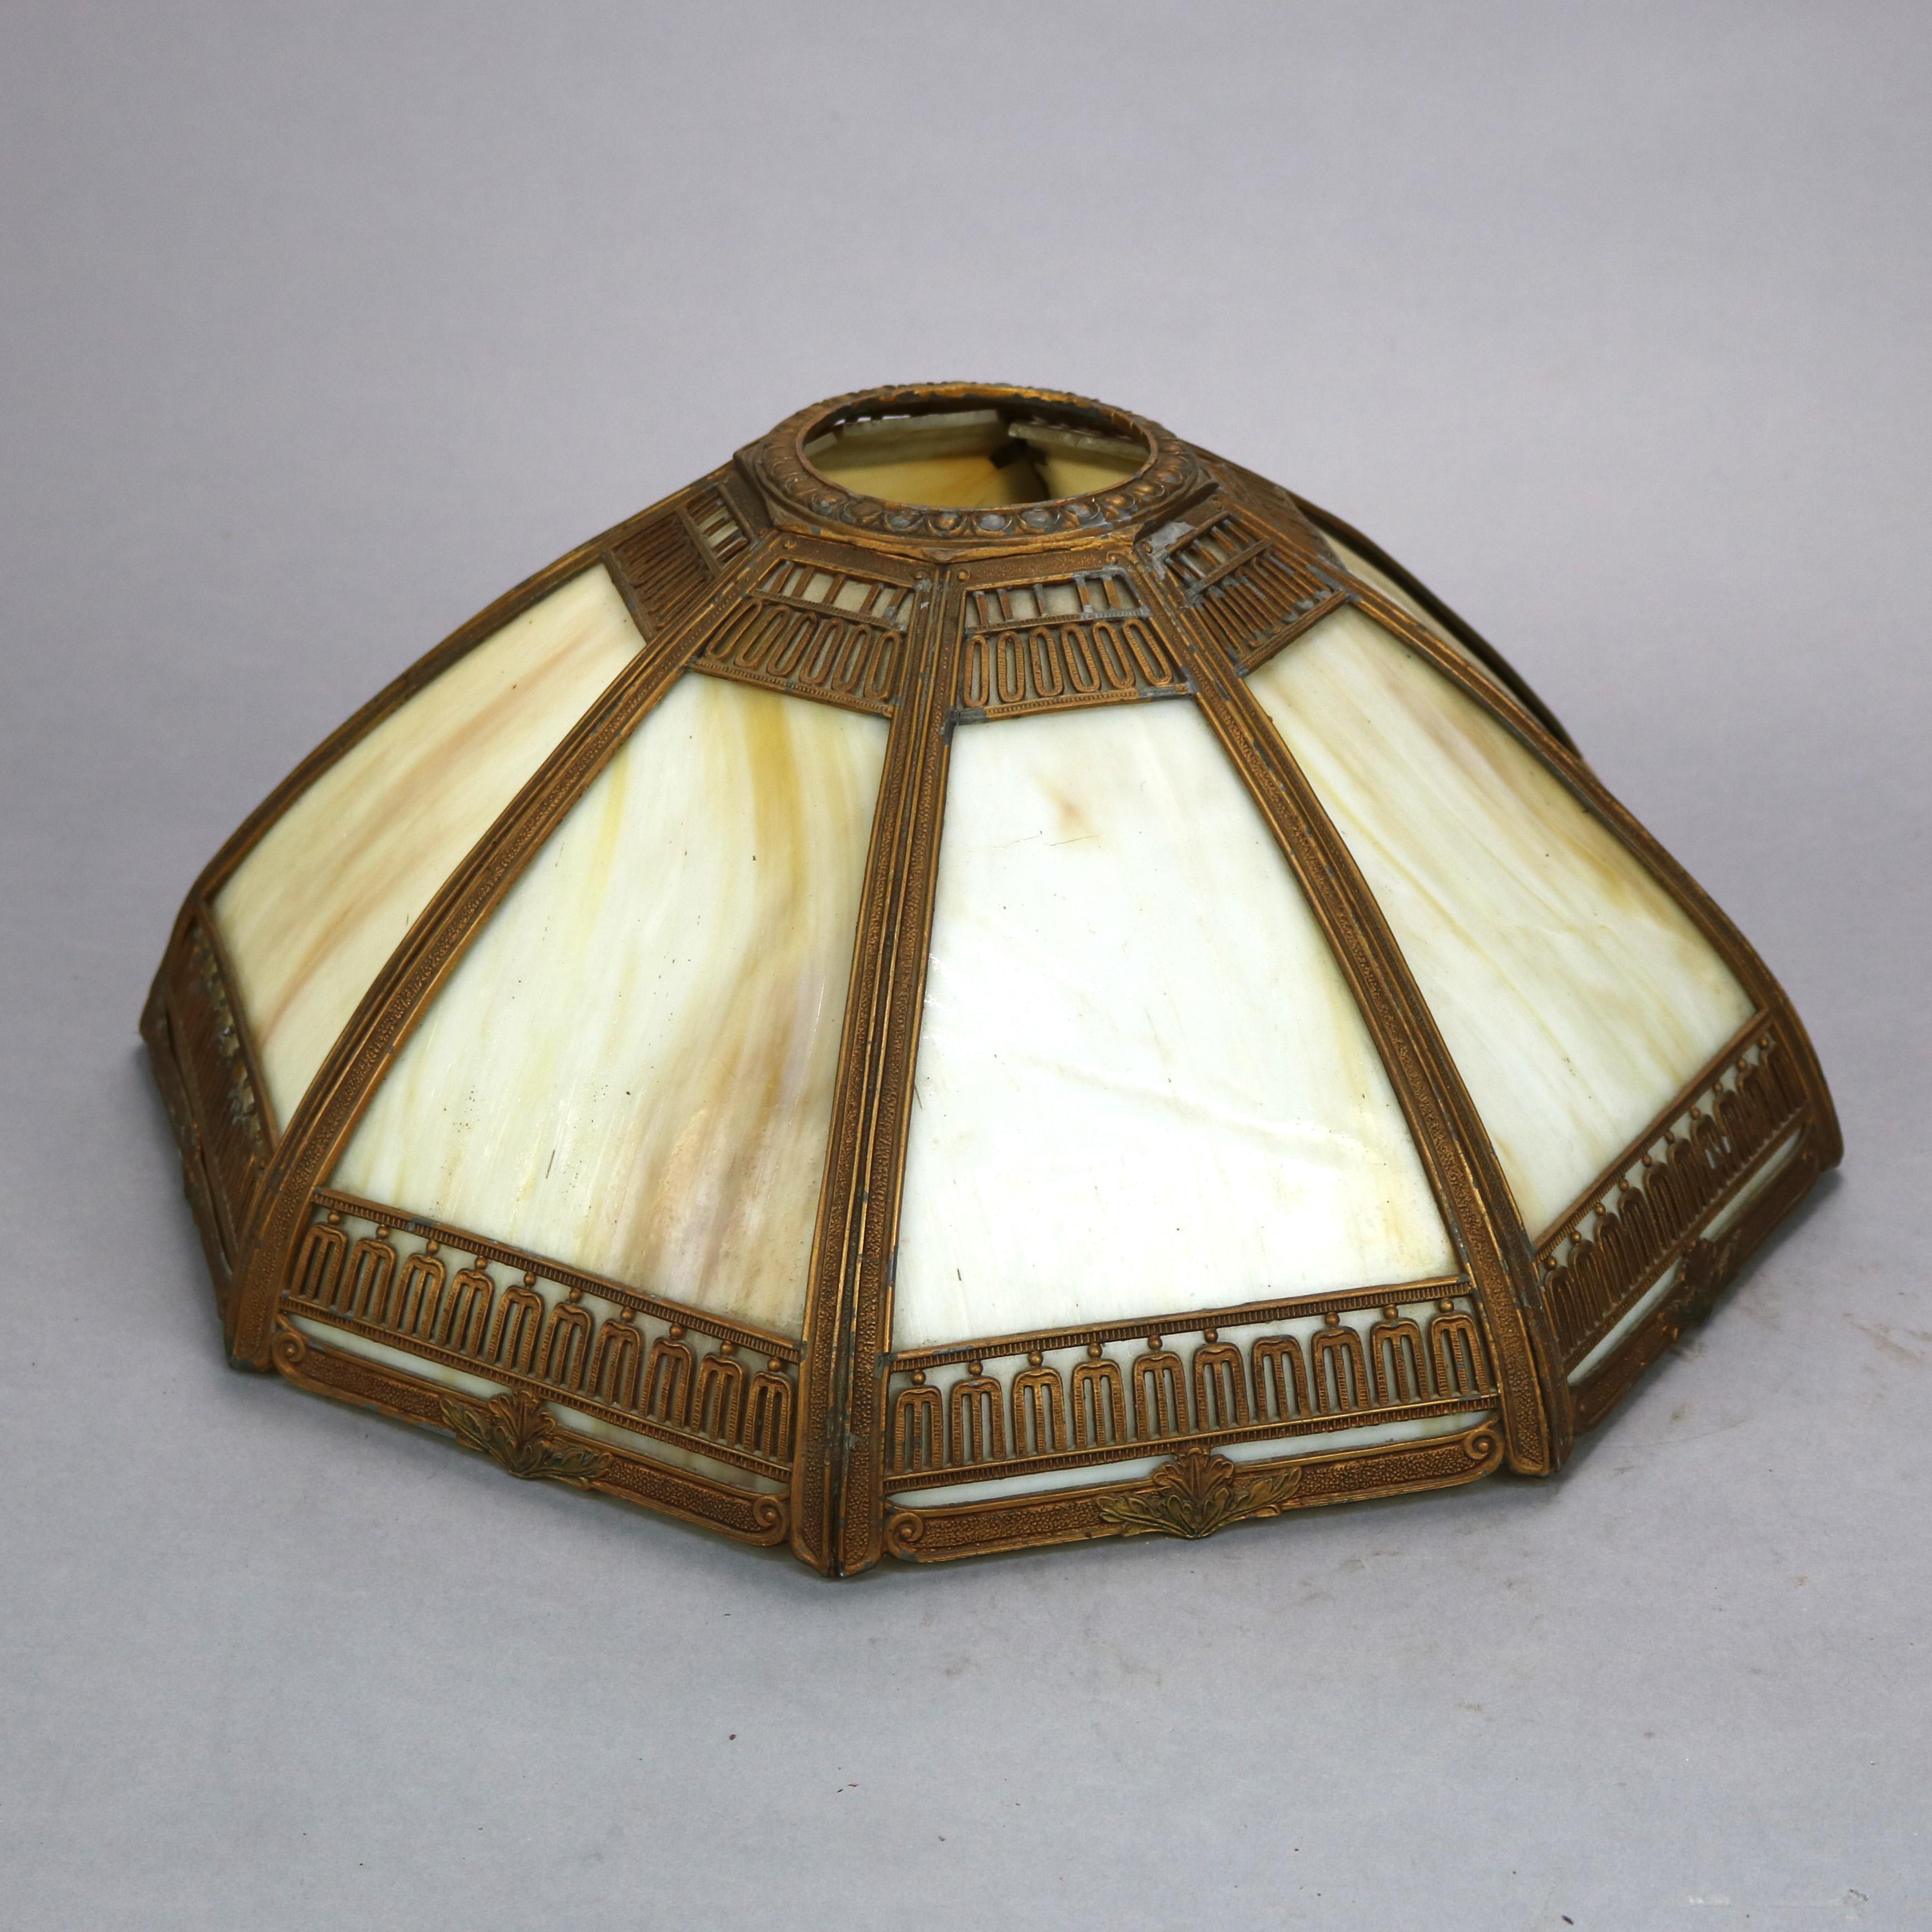 American Antique Arts & Crafts Slag Glass Table Lamp, Bradley & Hubbard School, c1920